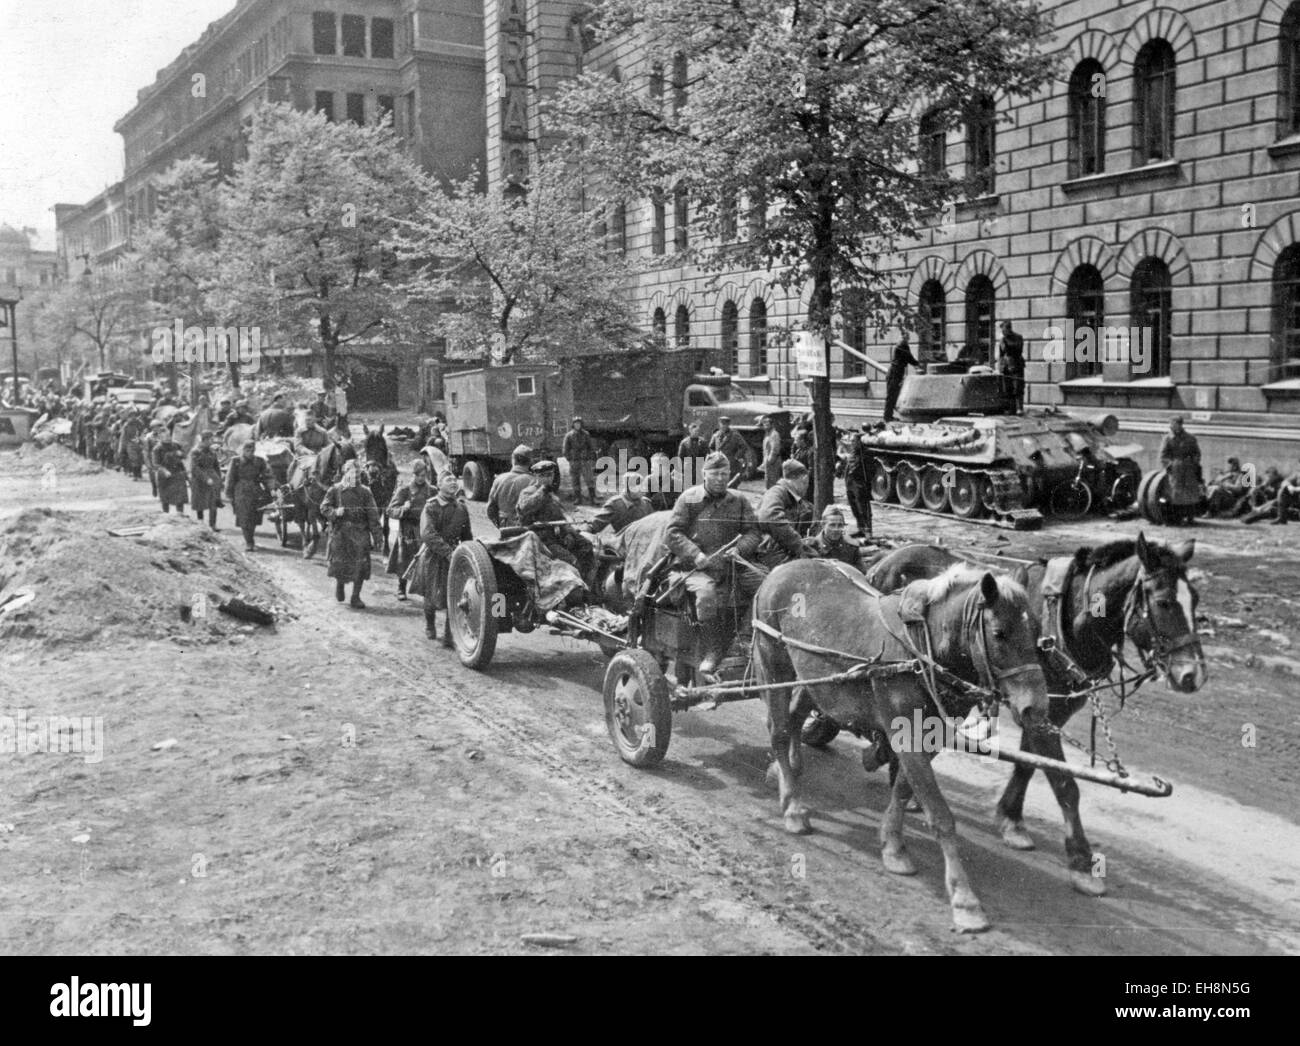 SOWJETARMEE IN BERLIN. Pferd gezogene Artillerie in einer Berliner Straße im April 1945 Stockfoto